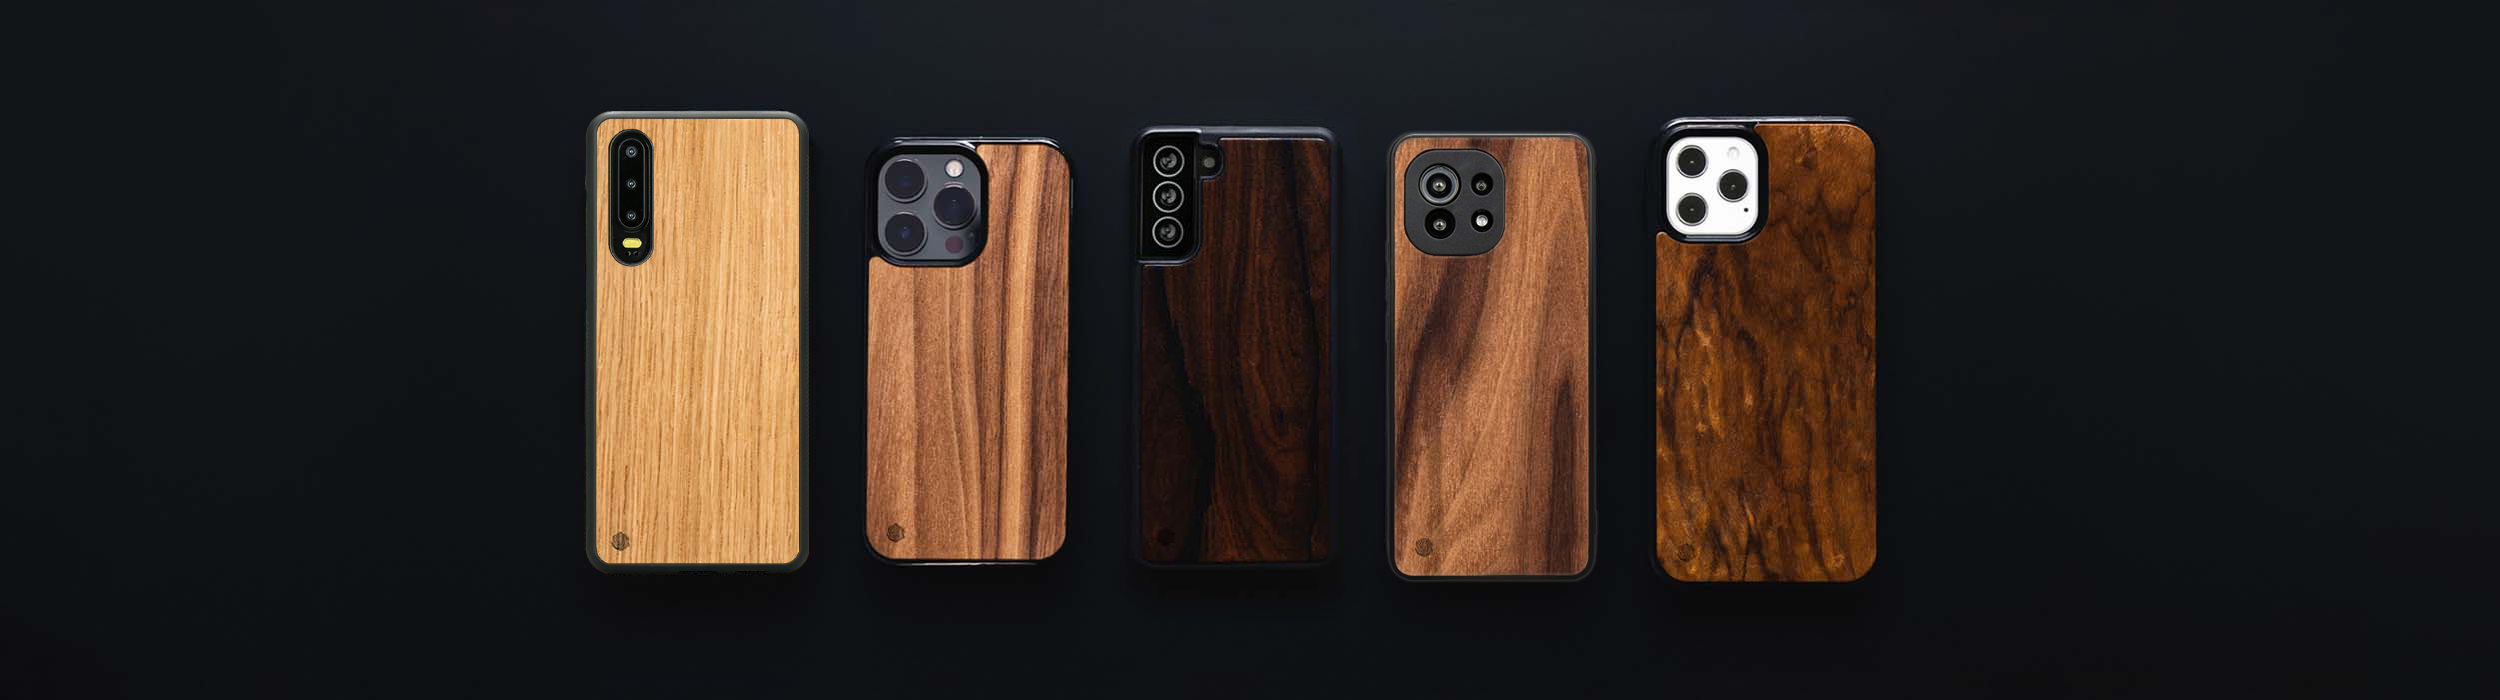 Xiaomi Mi 10 Pro Wooden Phone Cases